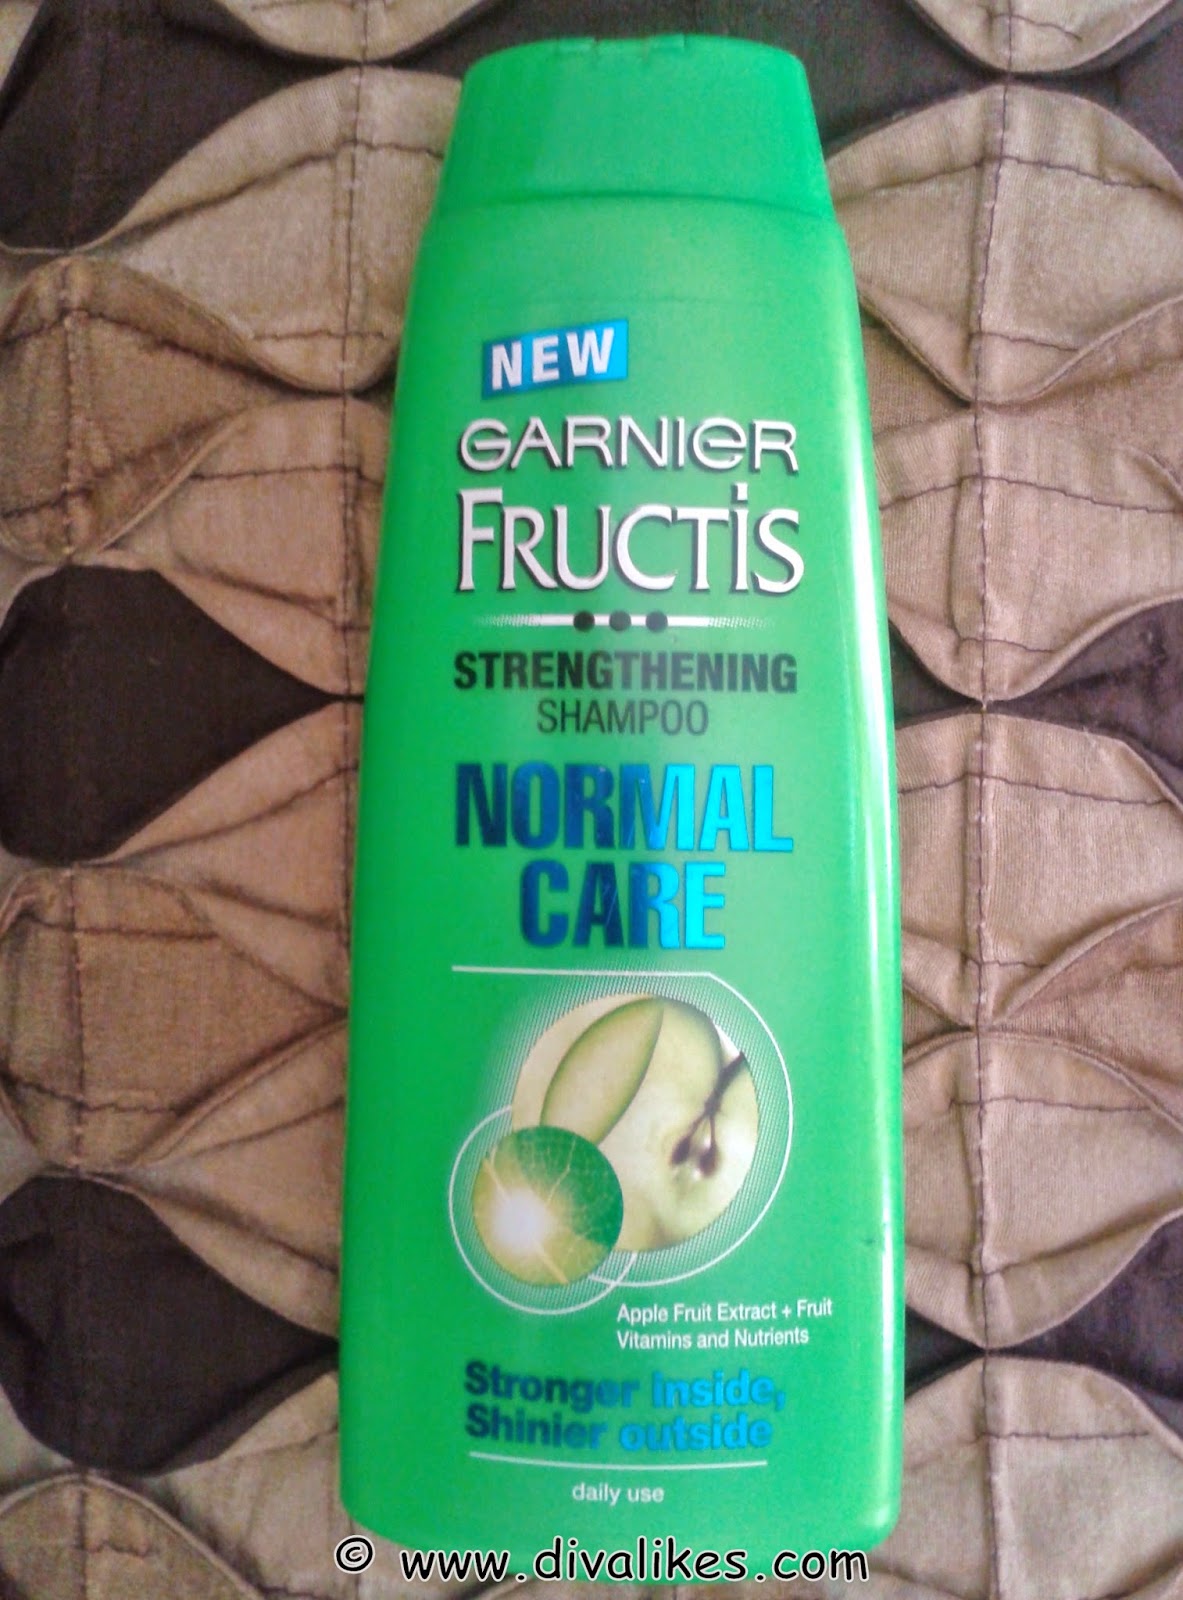 Compliment Aan de overkant spanning Garnier Fructis Normal Care Strengthening Shampoo Review | Diva Likes